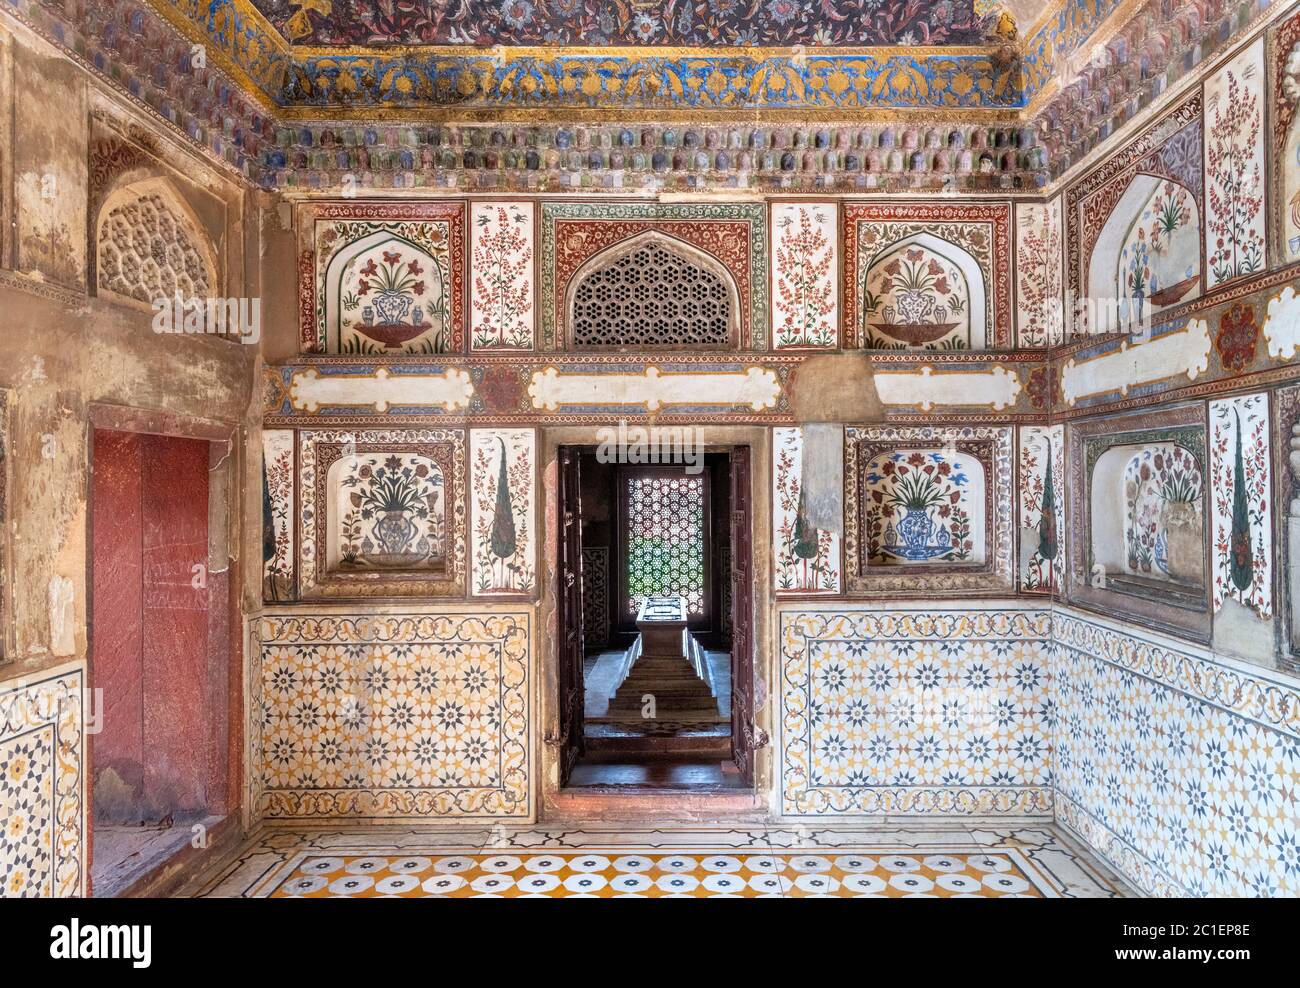 Sala d'ingresso, Tomba di Itmad-ud-Daulah (i'timād-ud-Daulah), conosciuta anche come 'Baby Taj', un mausoleo Mughal nella città di Agra, Uttar Pradesh, India Foto Stock